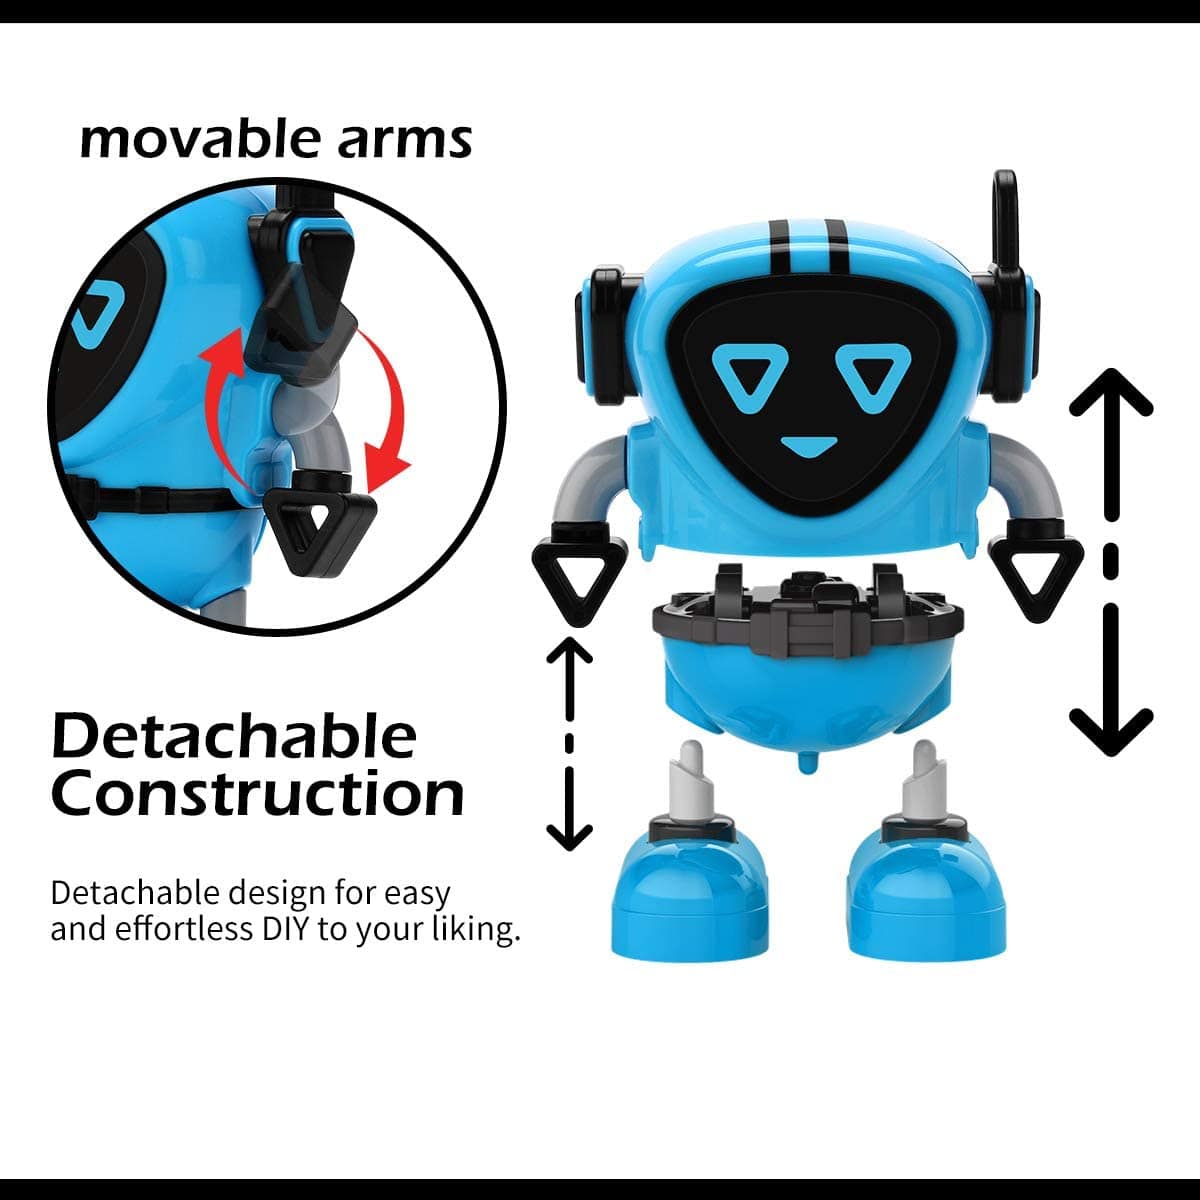 GyroBot - Multi-Action Transforming Gyro Force Robot Toy